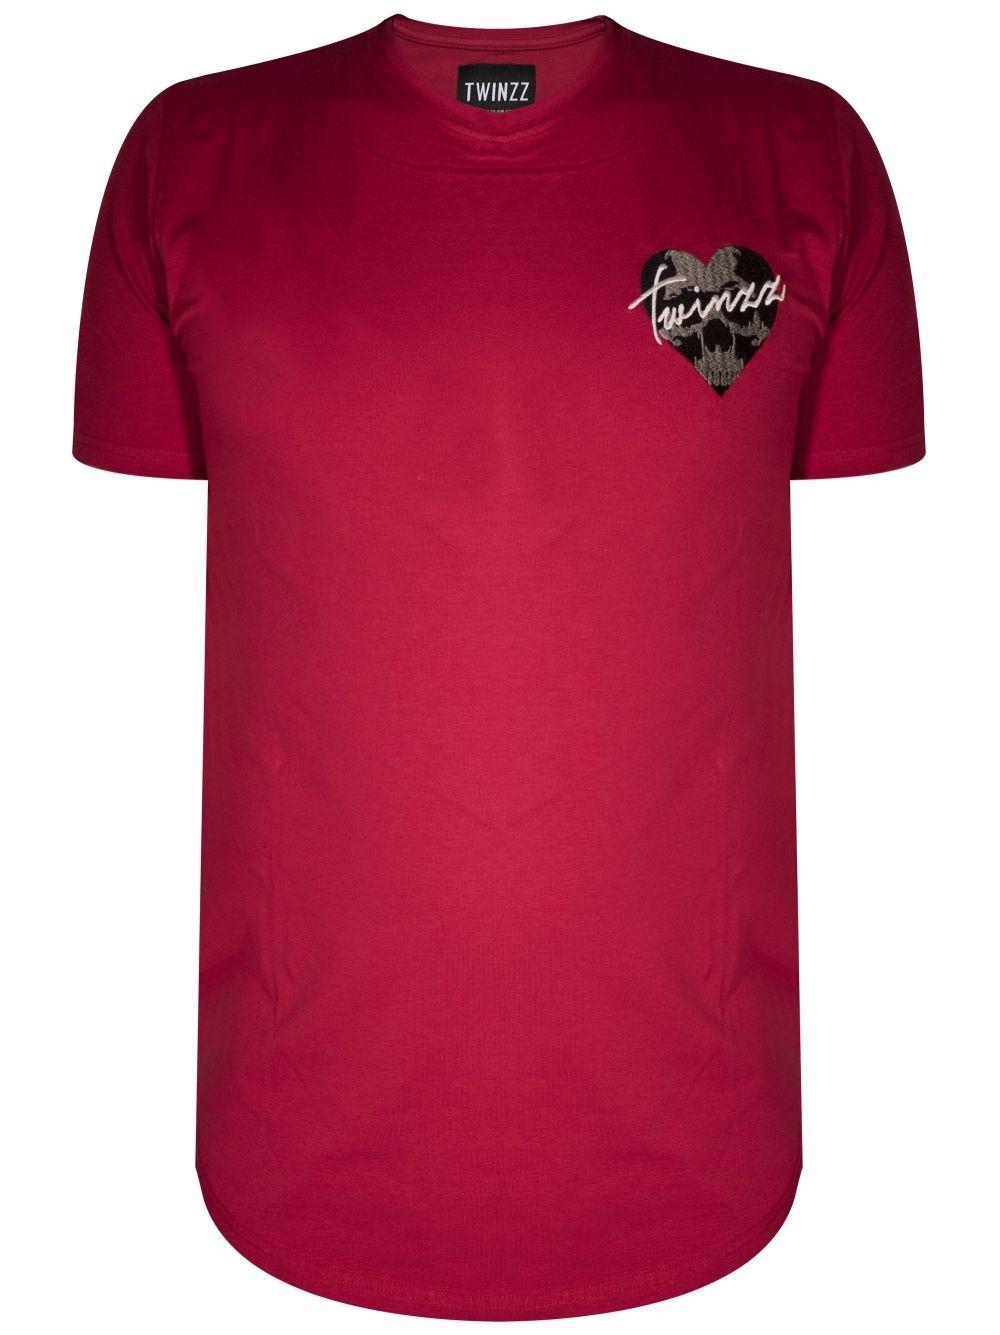 T and Heart Logo - Twinzz Red Heart Logo T-Shirt - Designerwear